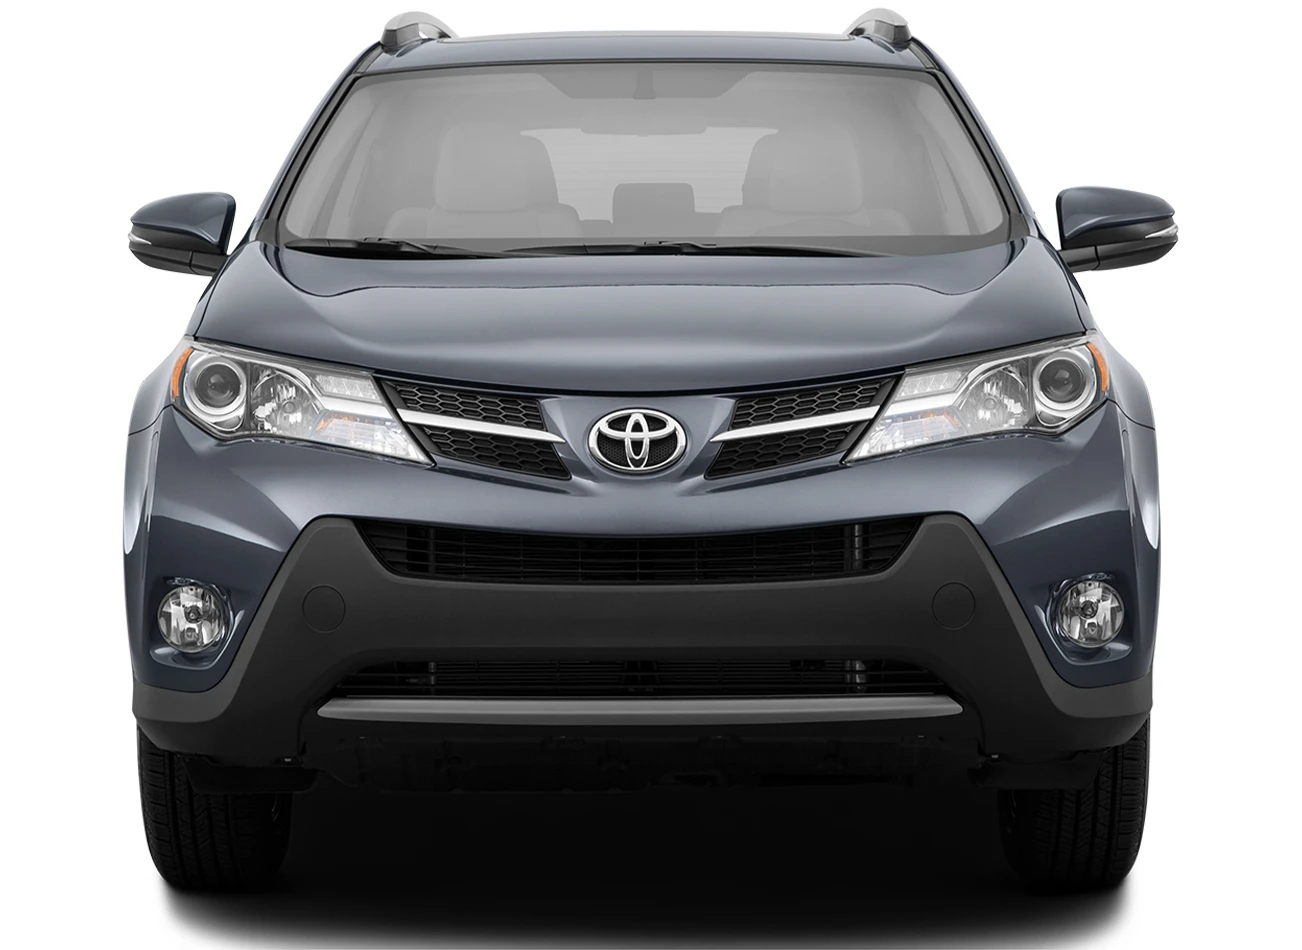 2015 Toyota RAV4: Reviews, Photos, and More: Reasons to Buy #3 | CarMax